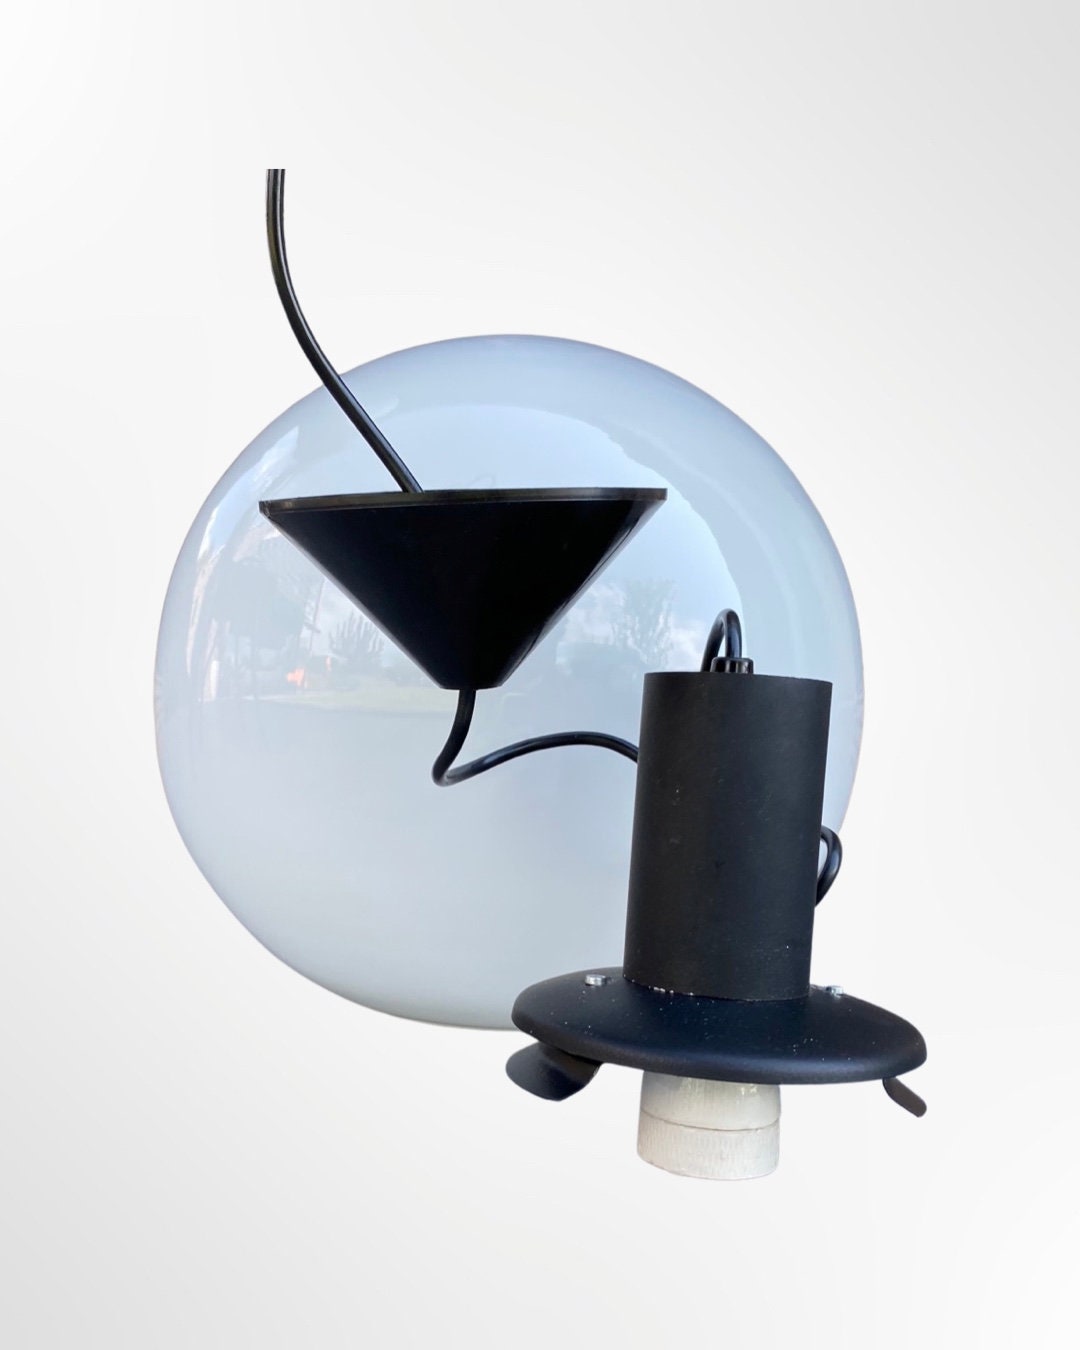 1950s Big Glass ART DECO Pendant Lamps | Vintage Pendant Lighting Globe / Ball Shaped Milk Glass